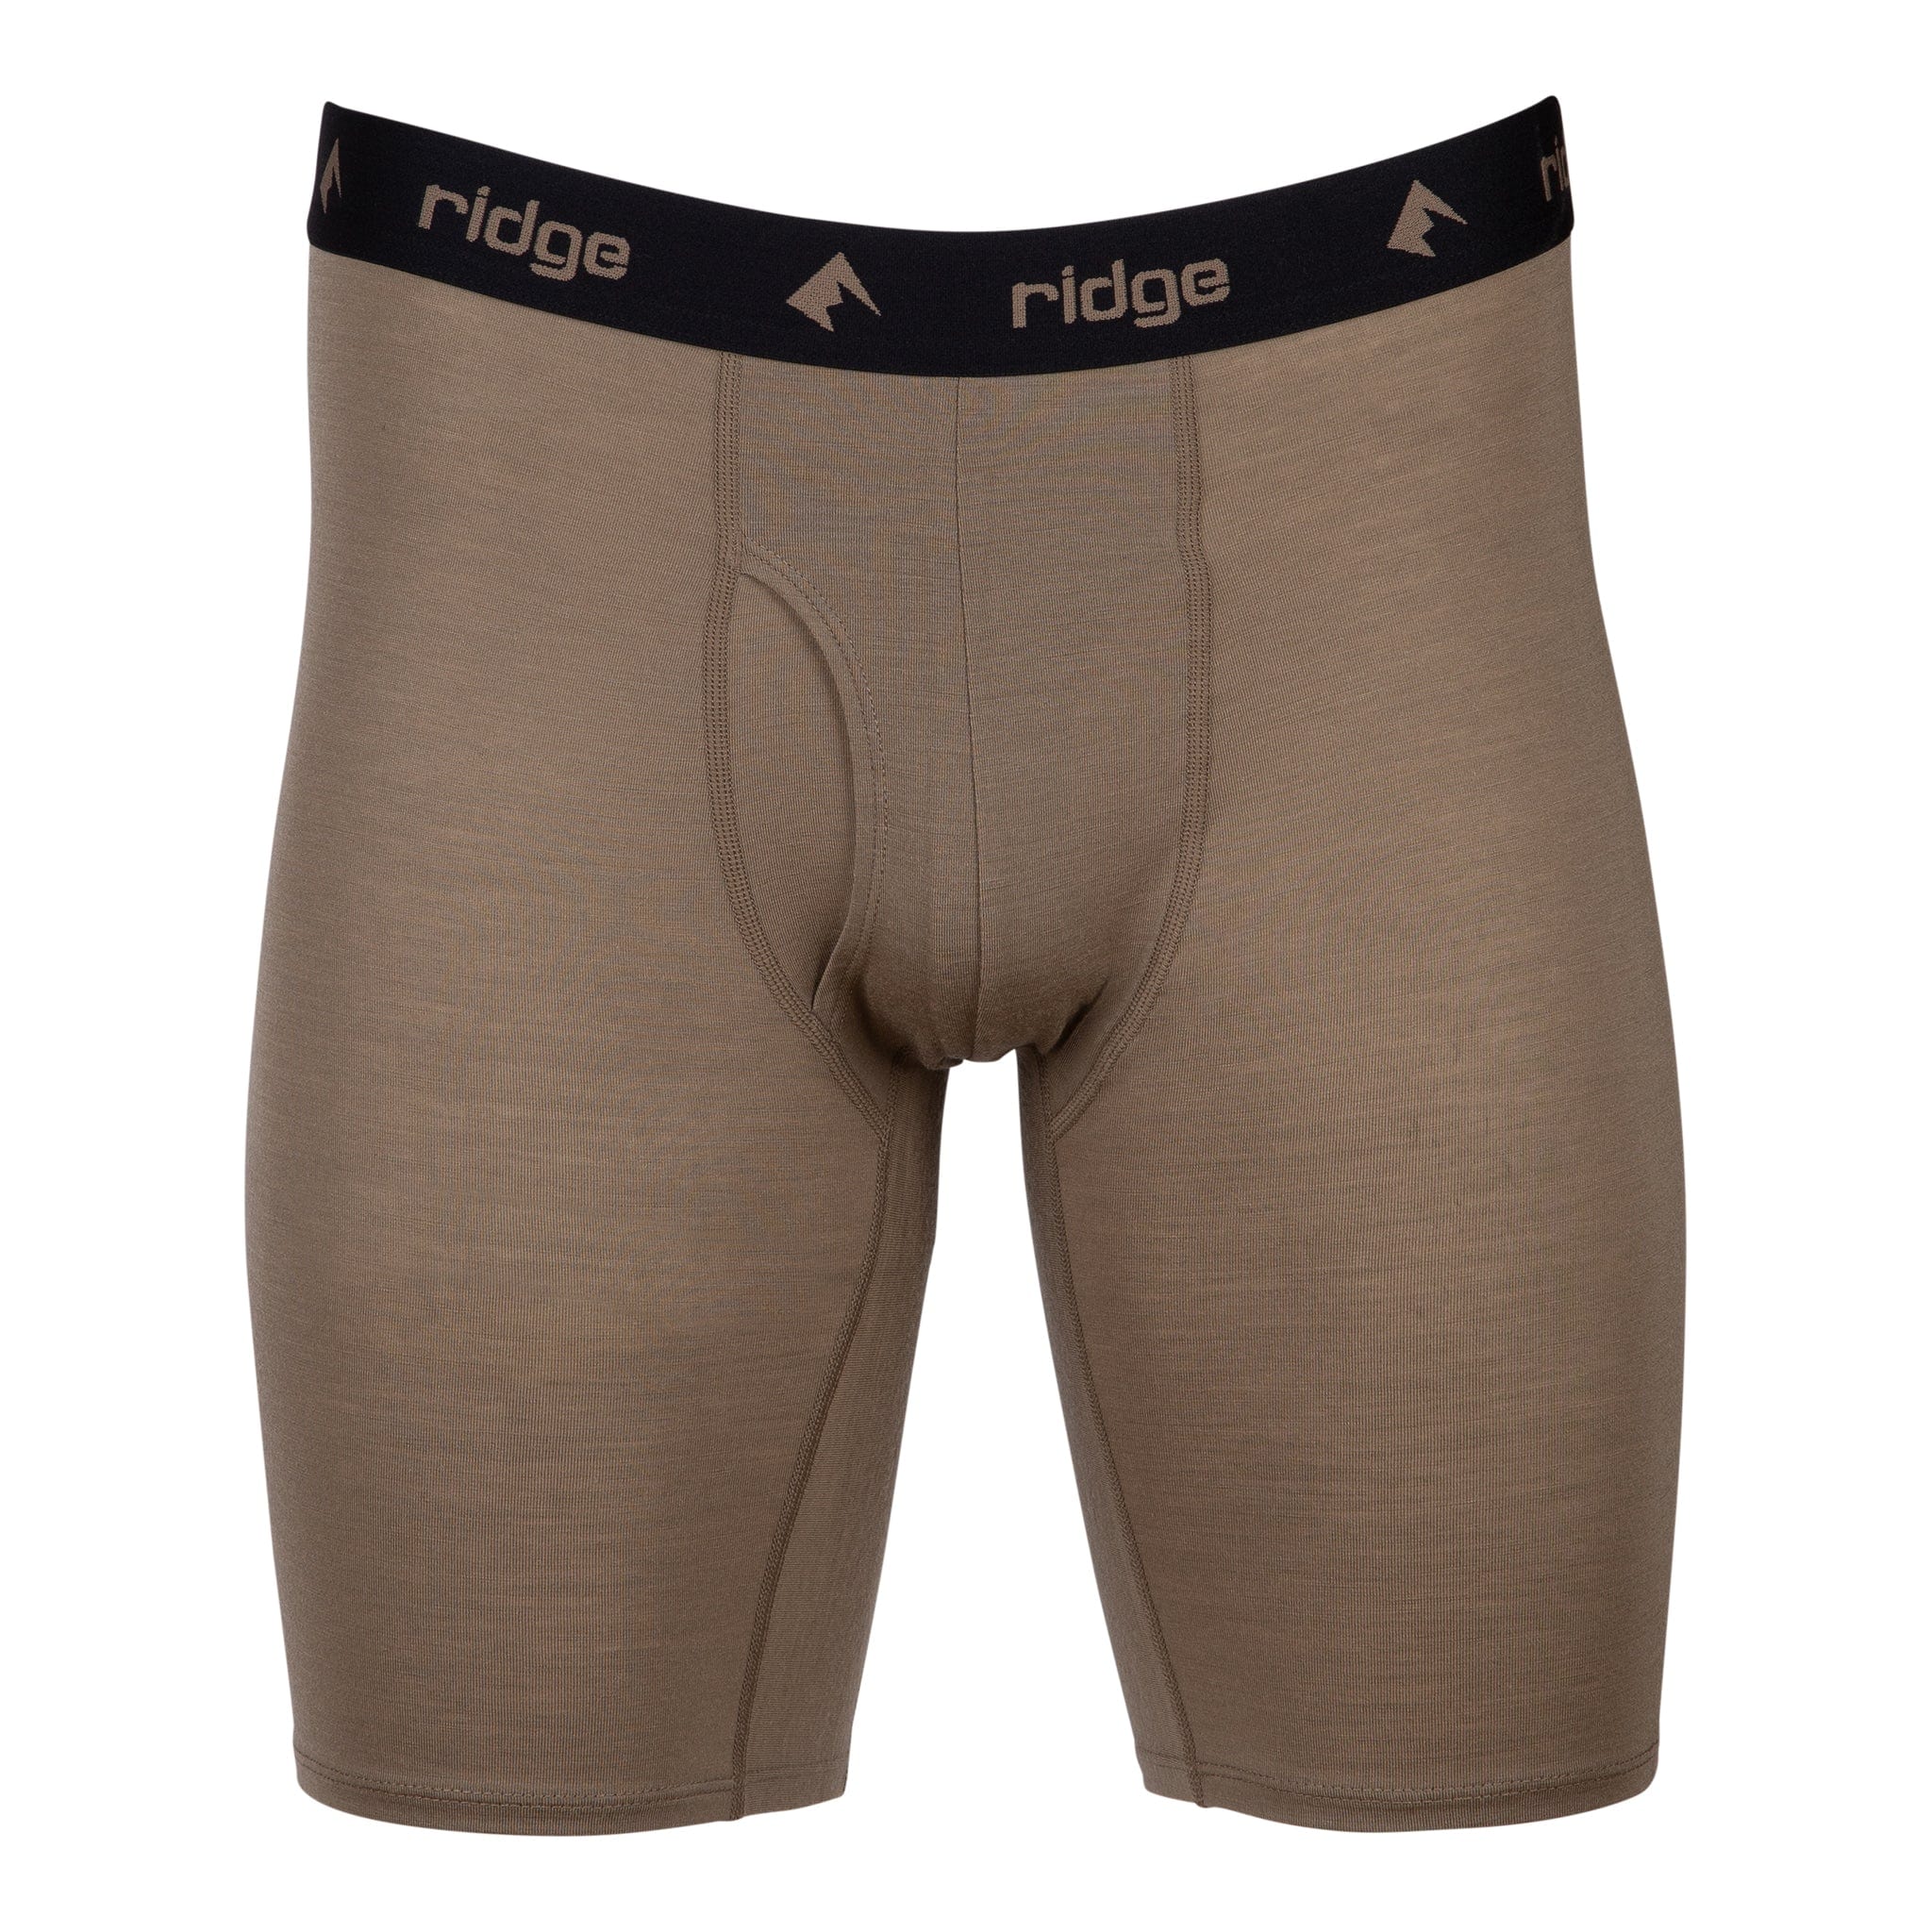 Men's Long 9 Boxer Briefs, Men's Underwear